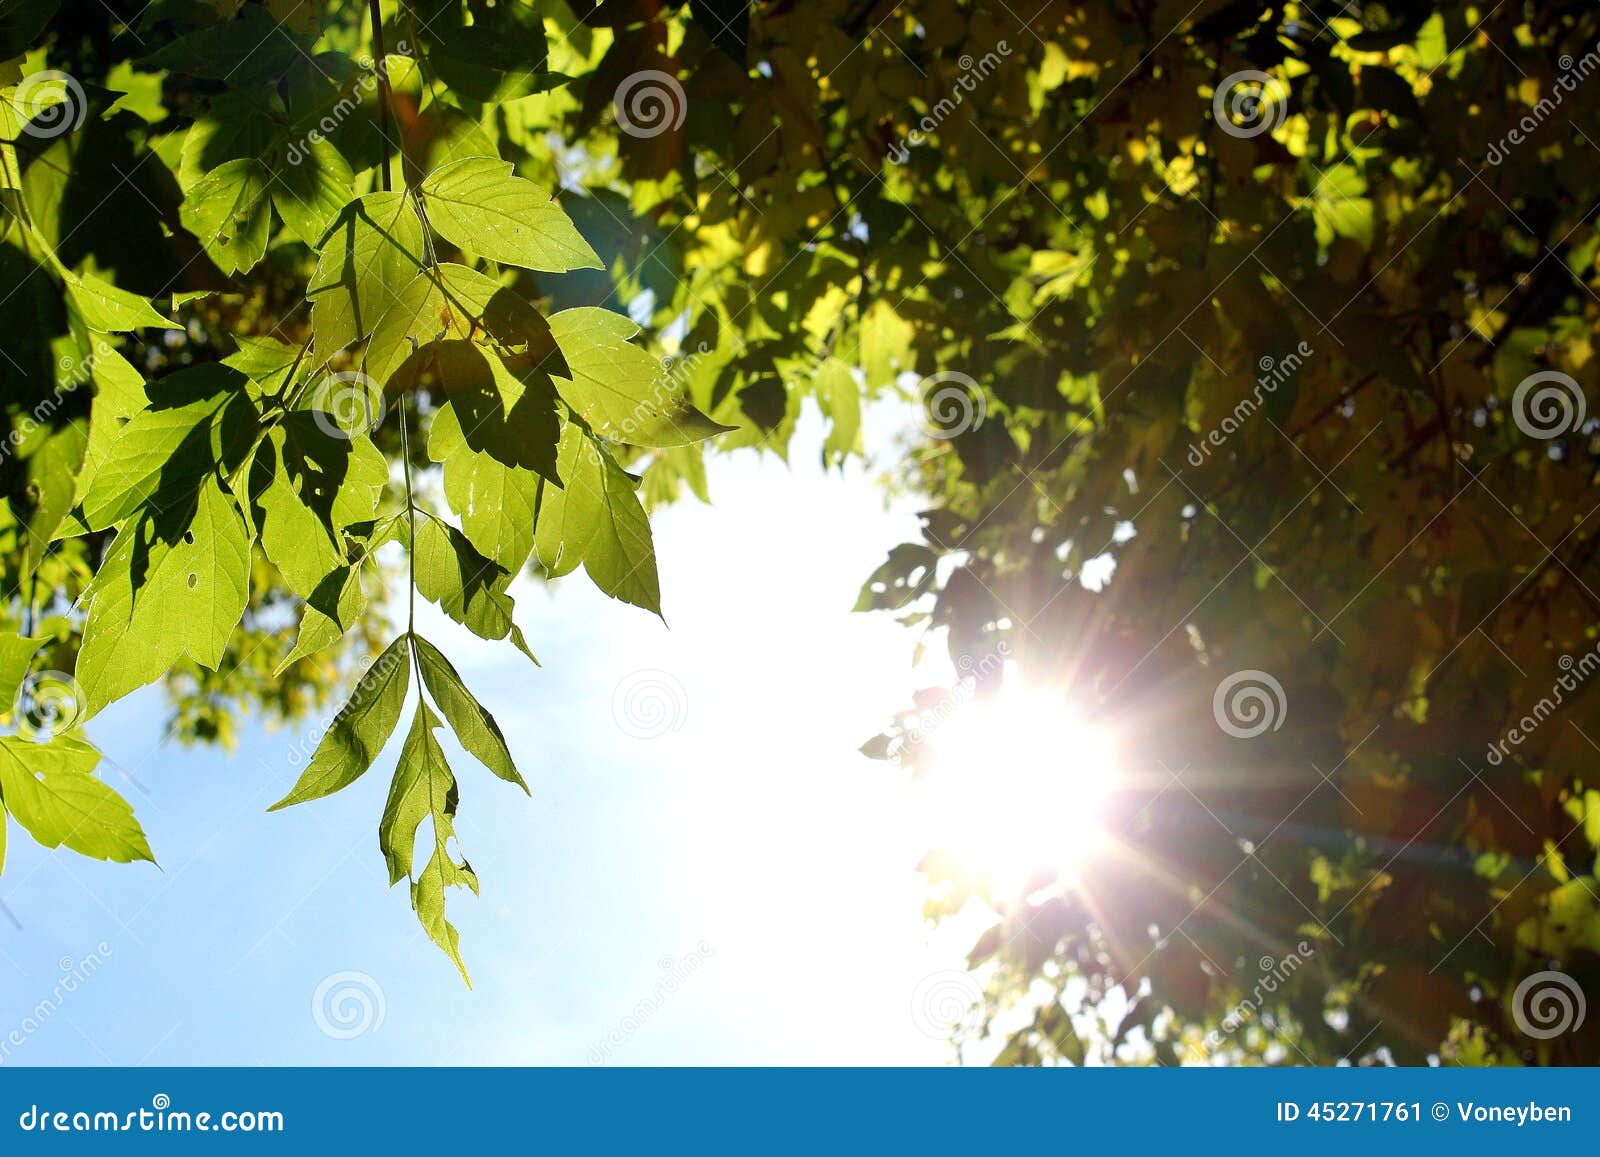 sunshine glimmering through green leaves